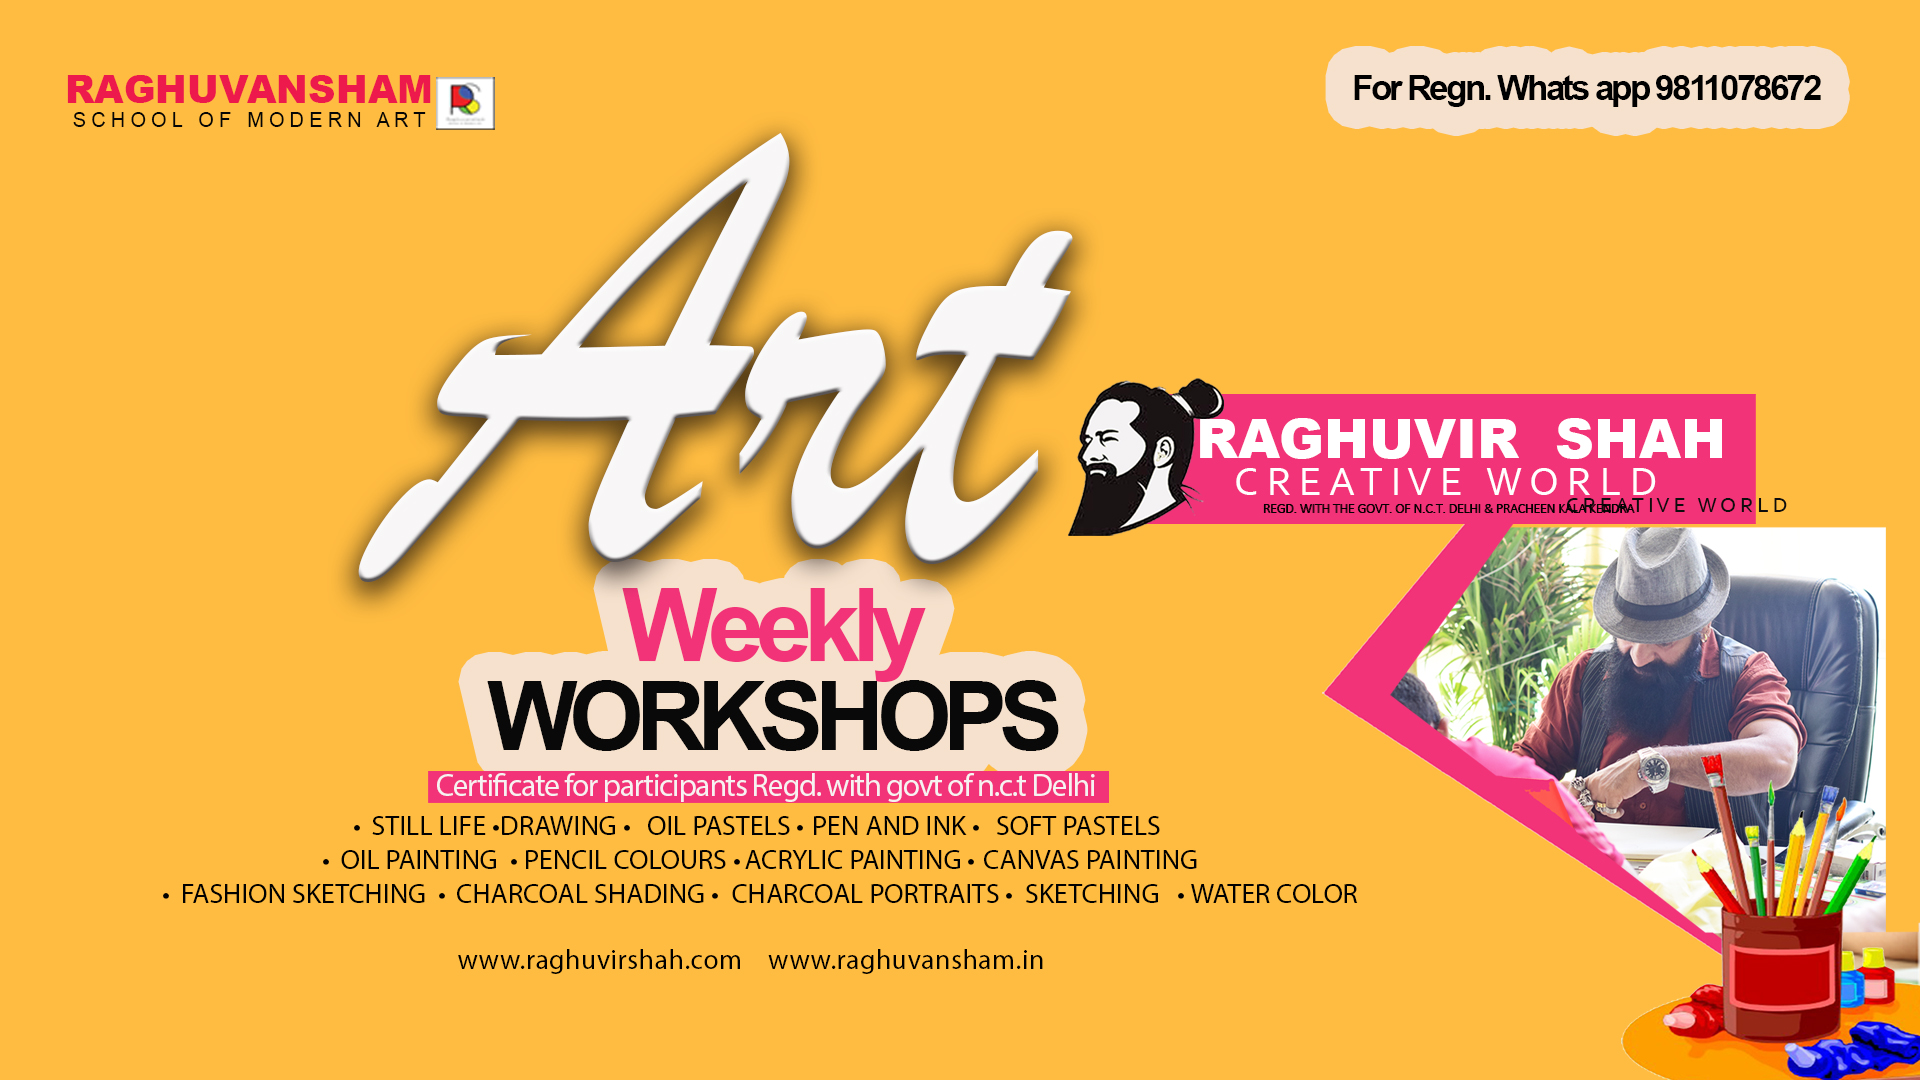 Art Workshop with Raghuvir Shah Sir at Raghuvir Shah Creative World at Raghuvansham School of Modern ArtEducation and LearningWorkshopsWest DelhiPunjabi Bagh